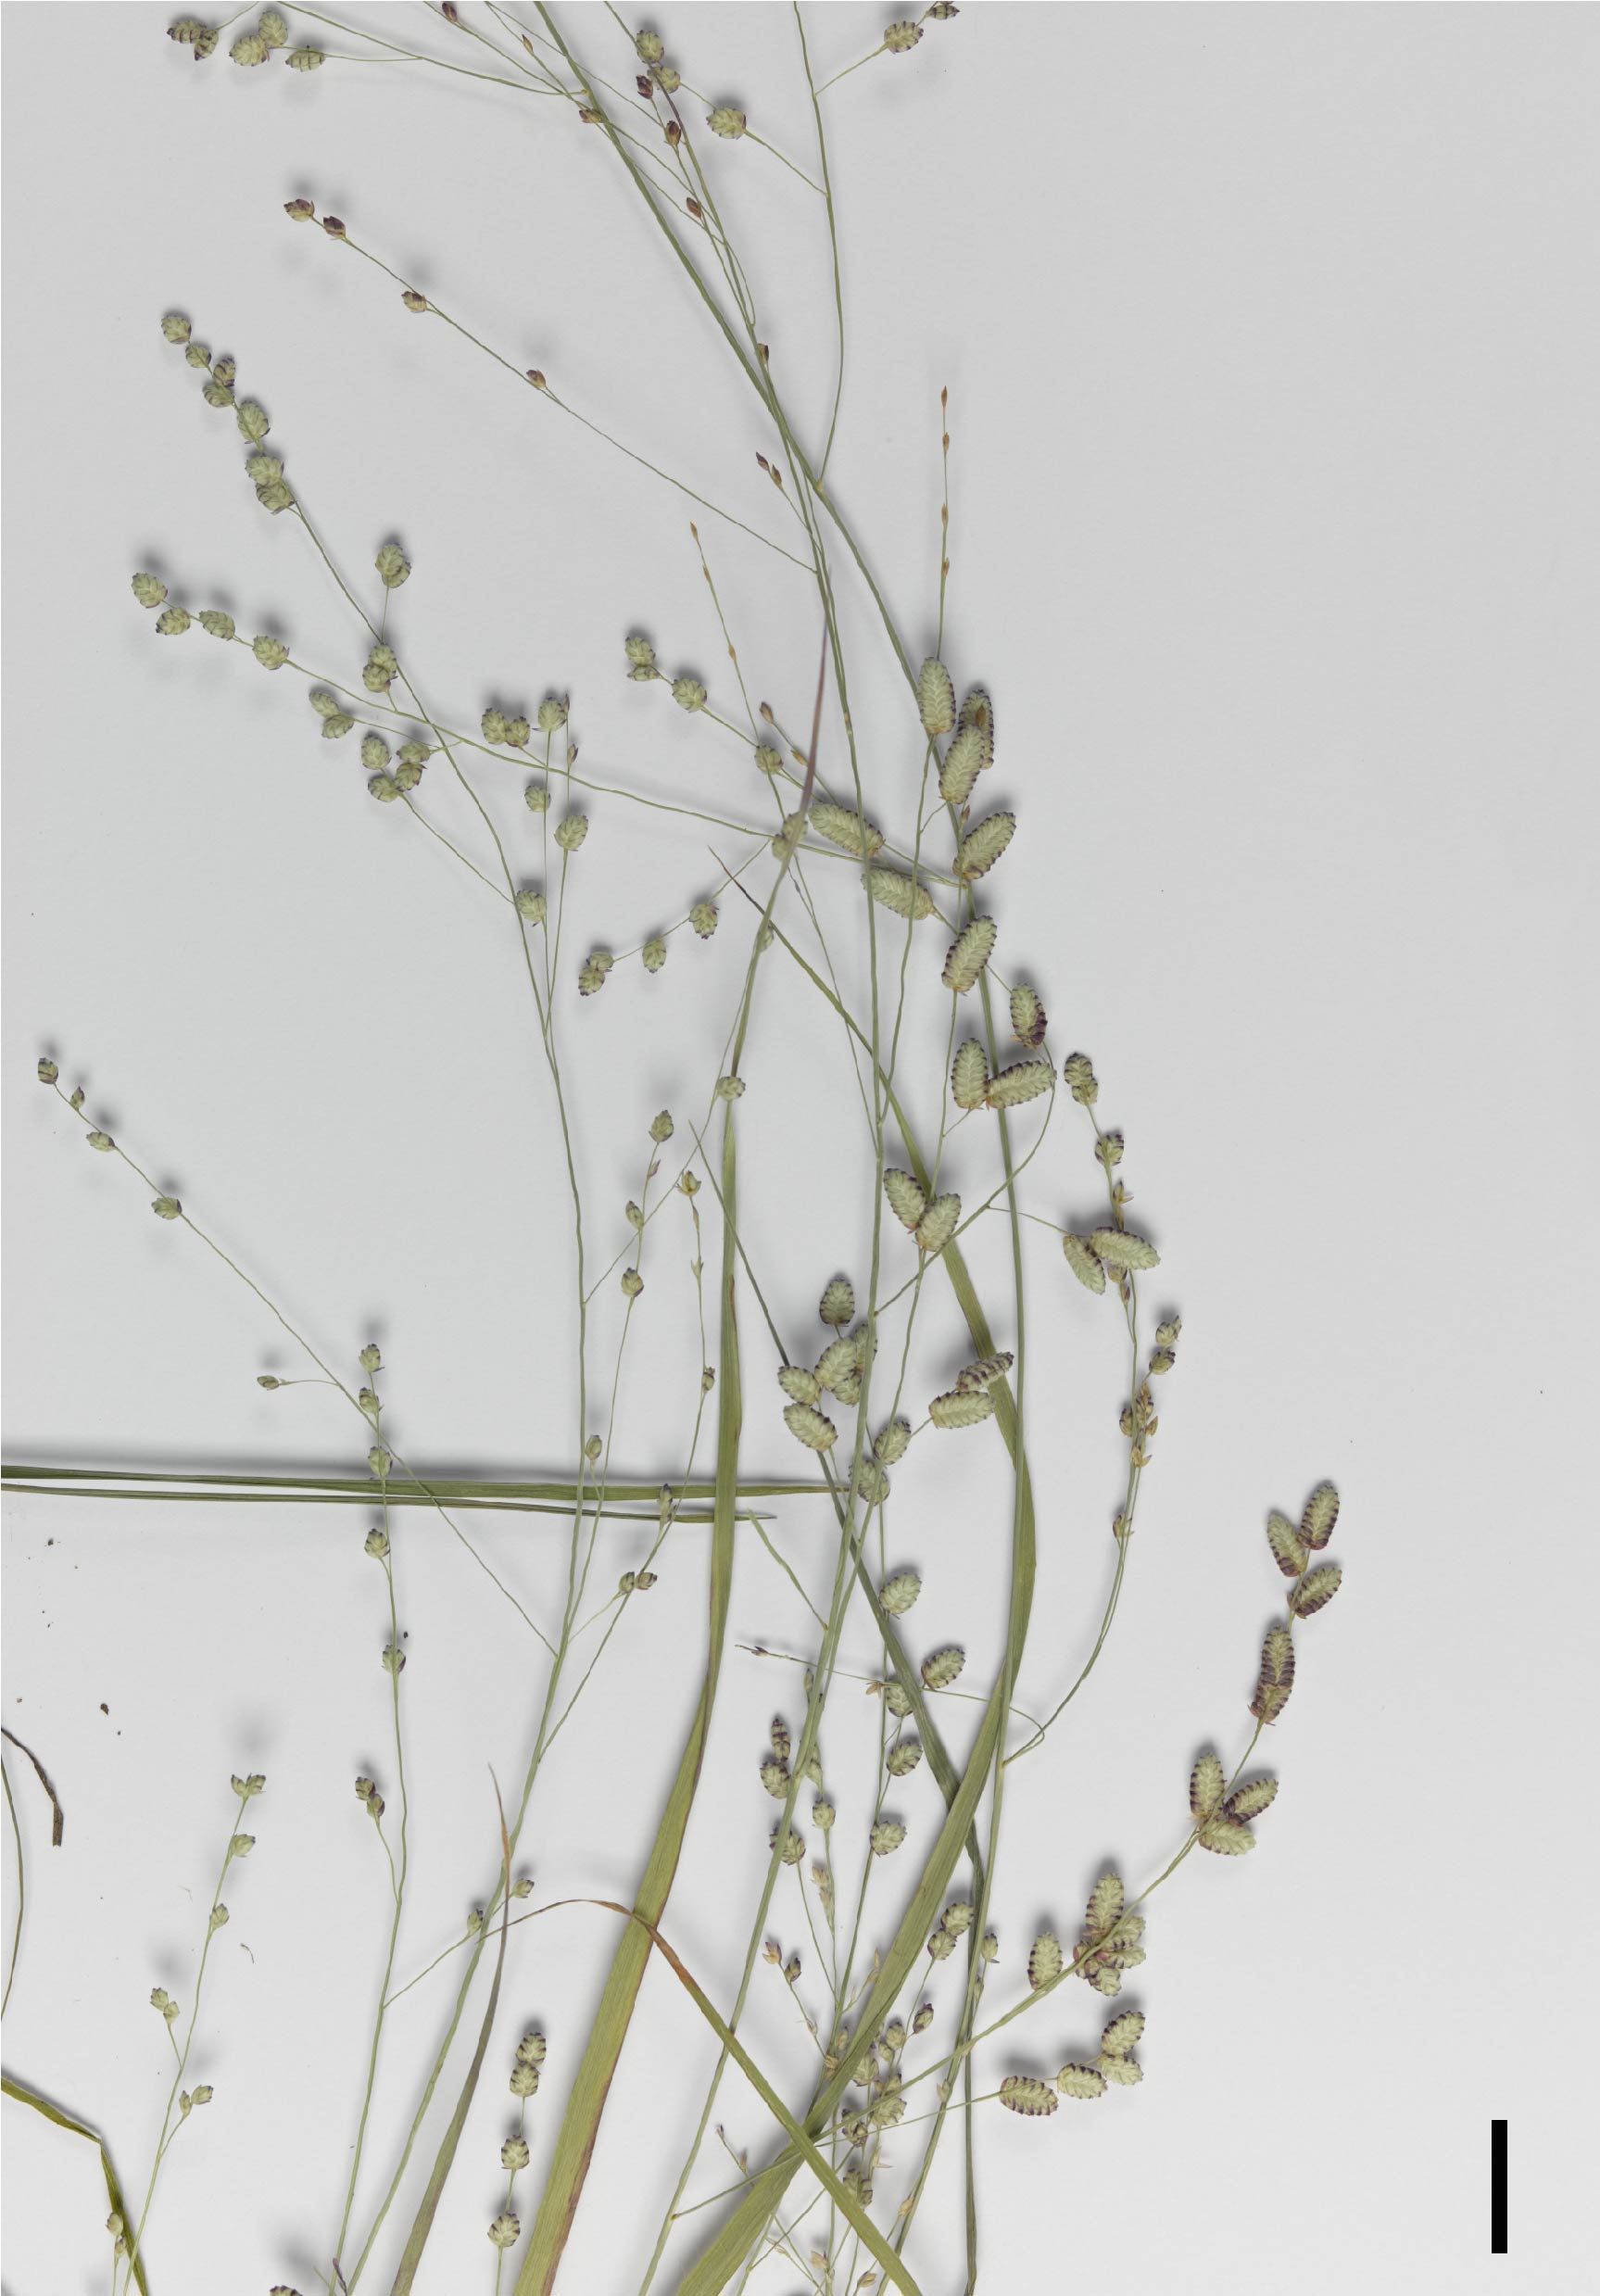 Fig. 2. Inflorescence of Eragrostis jacobsiana (DMC1528) (scale bar = 1cm)